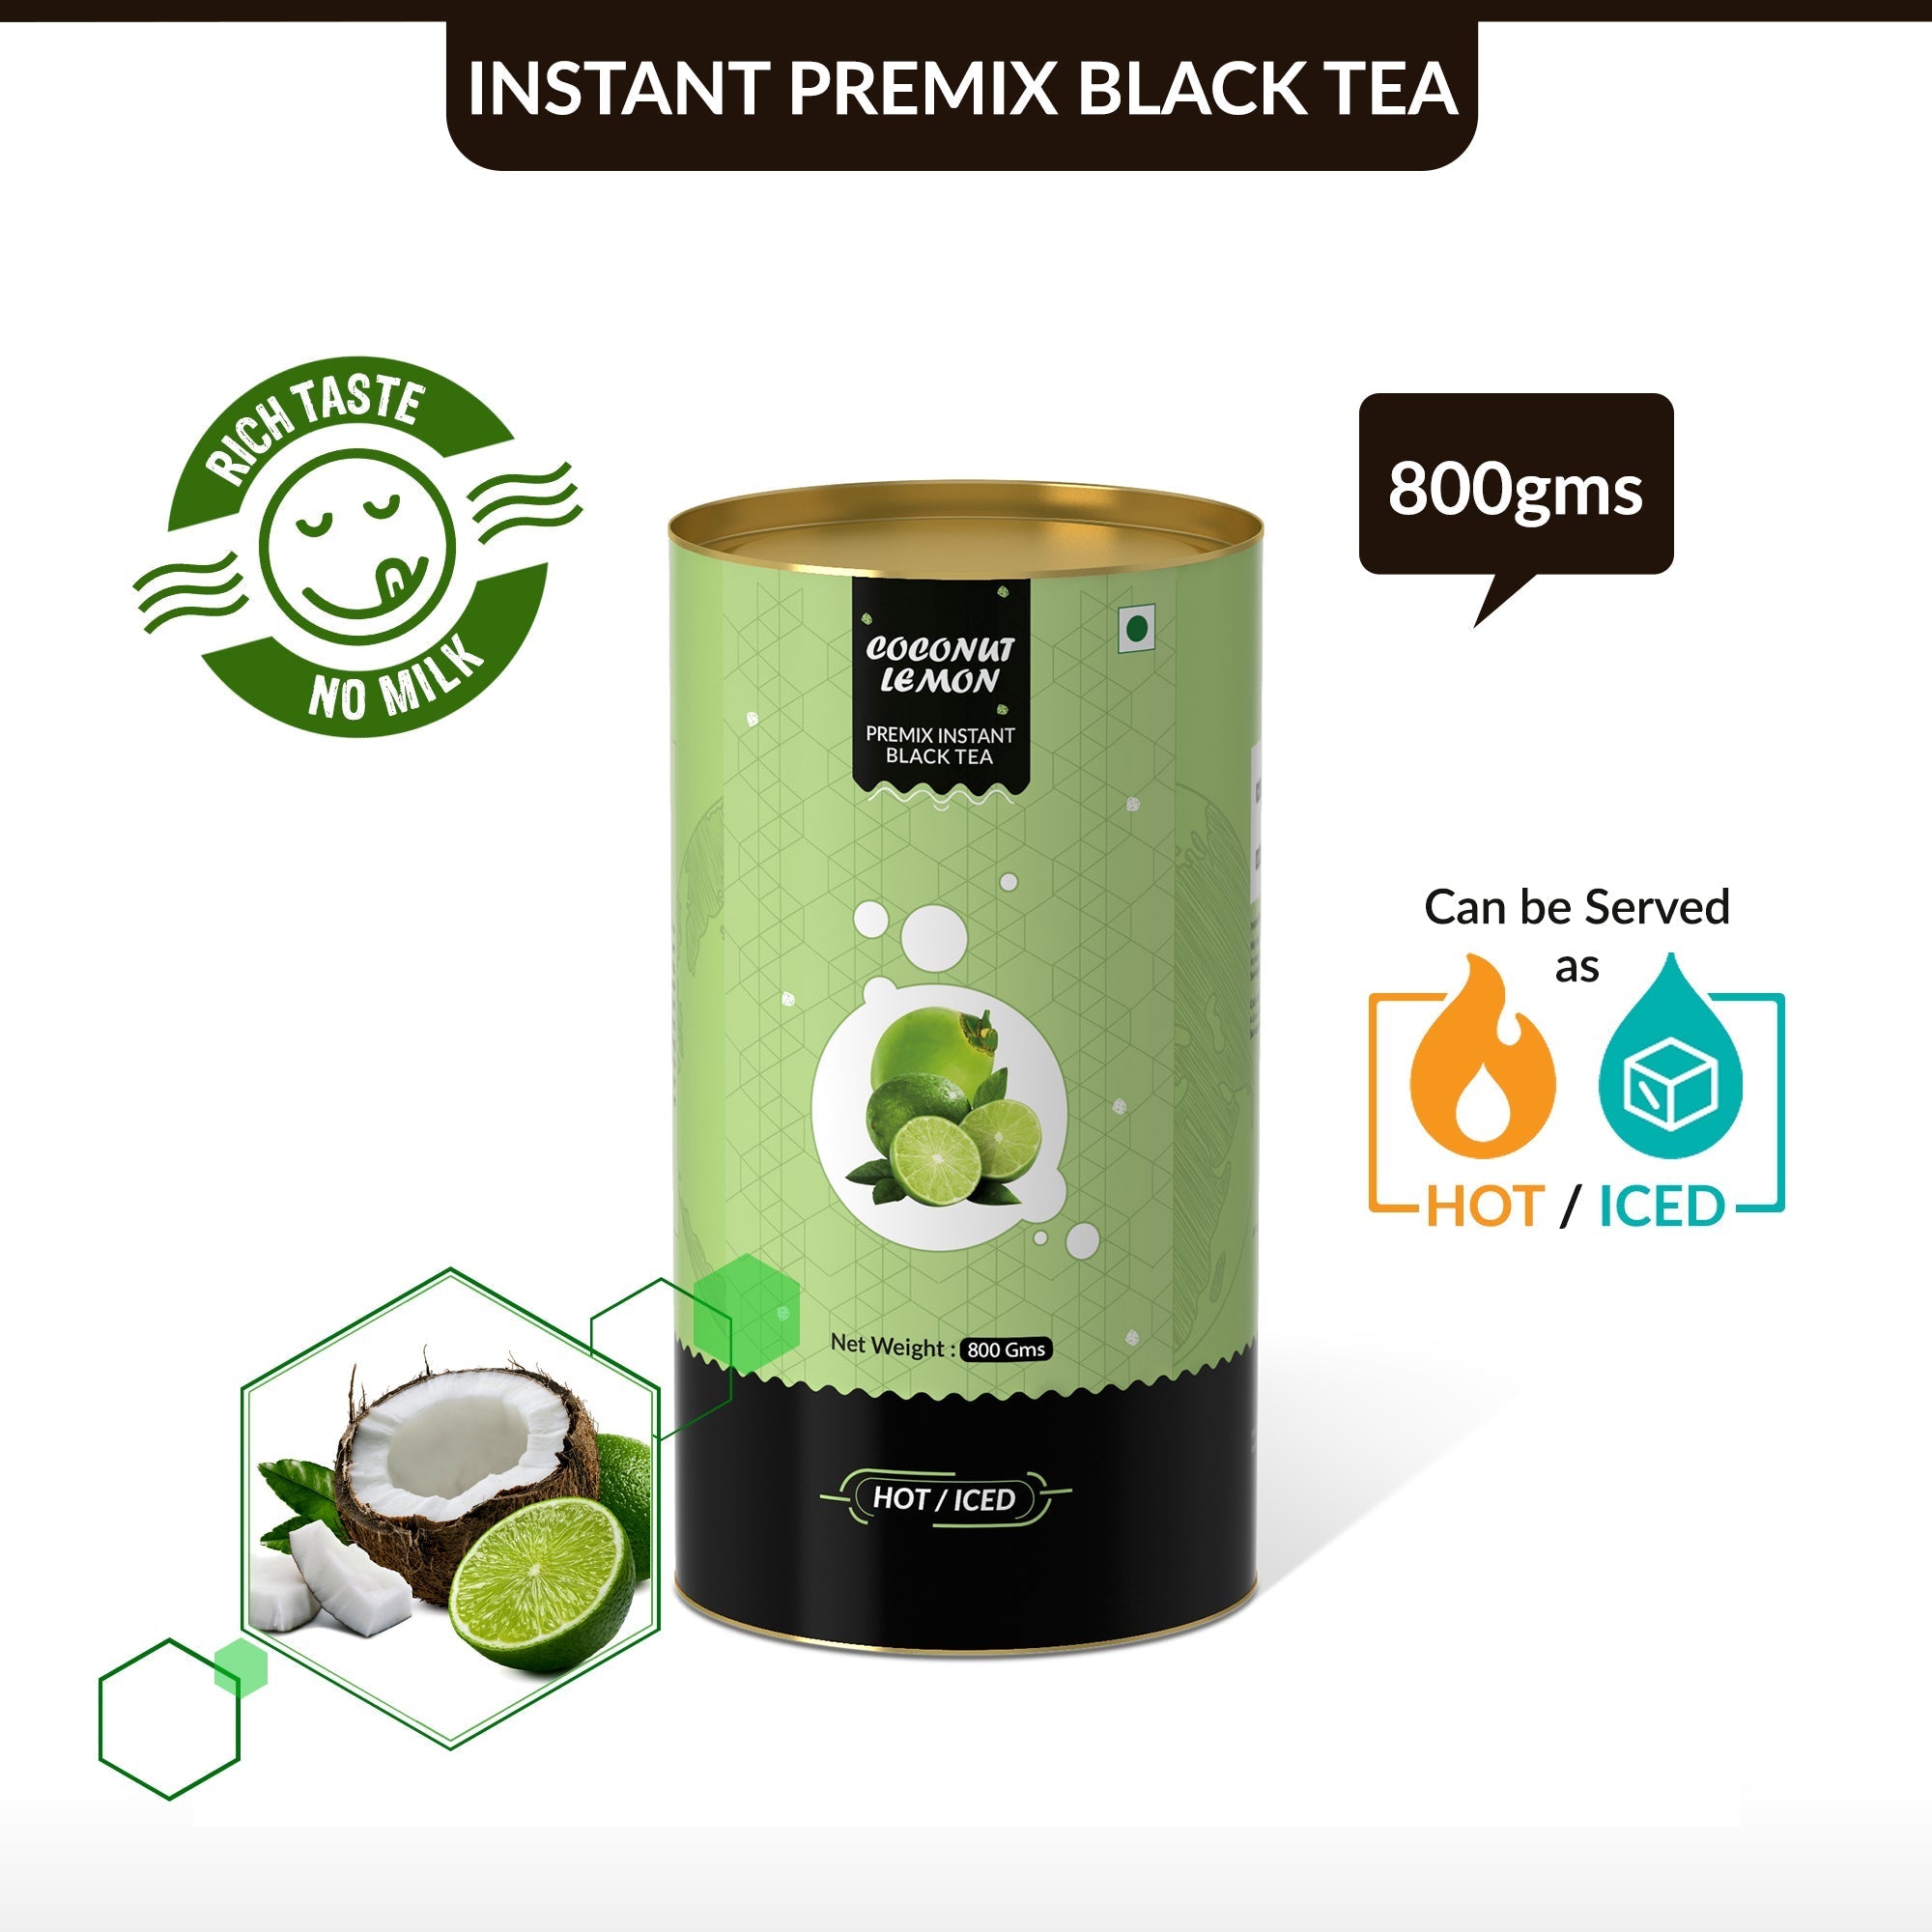 Coconut Flavored Instant Black Tea - 800 gms